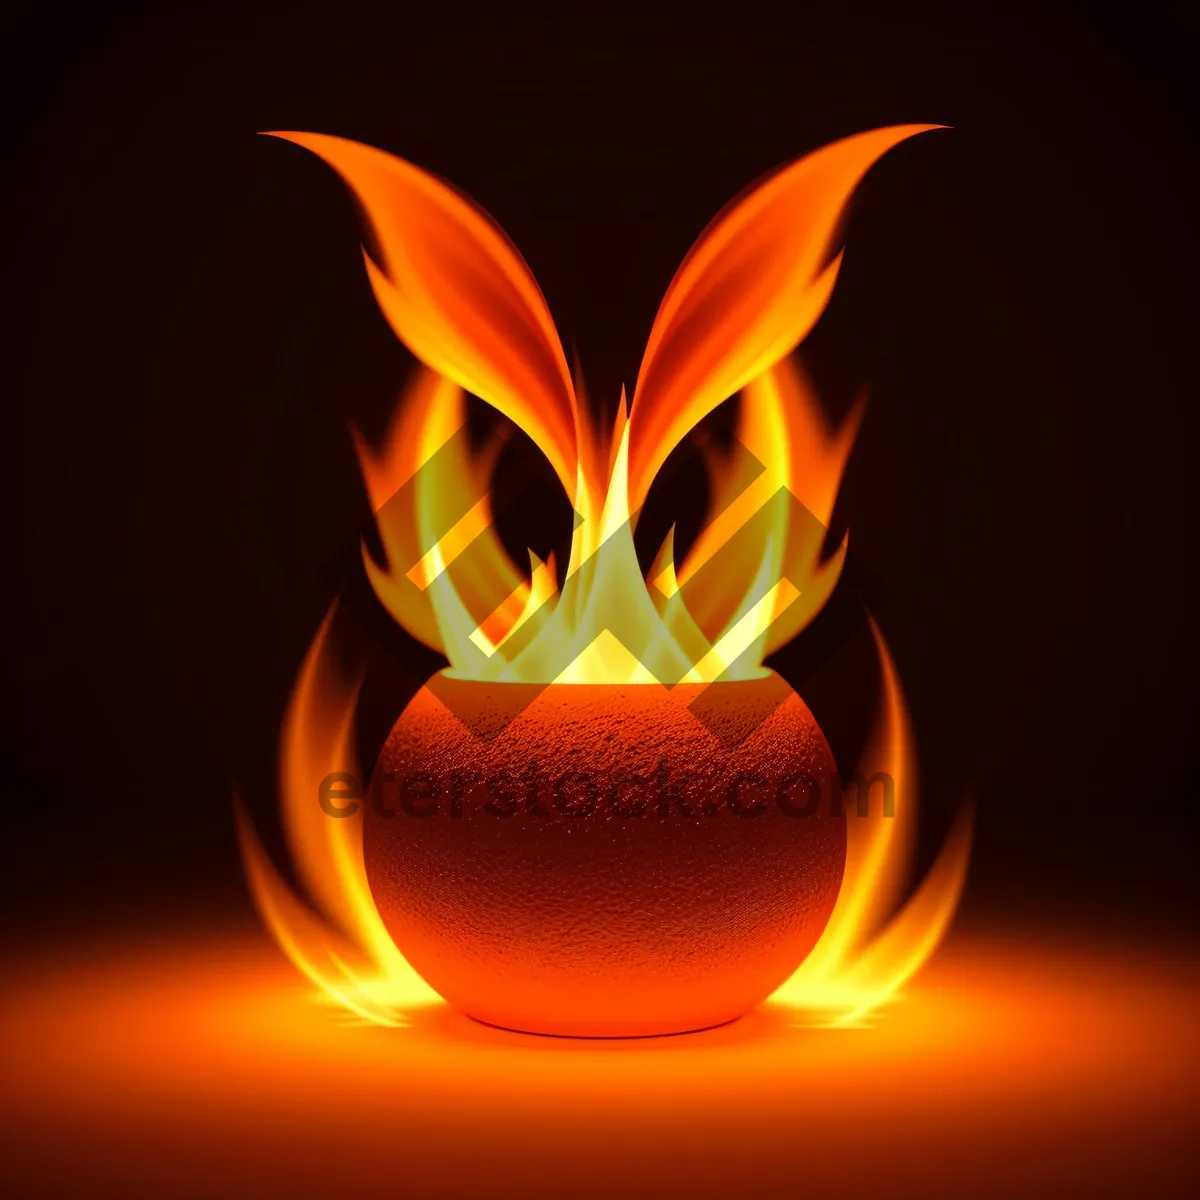 Picture of Fiery Blaze Illuminates Black Bonfire - Hot, Orange Flames